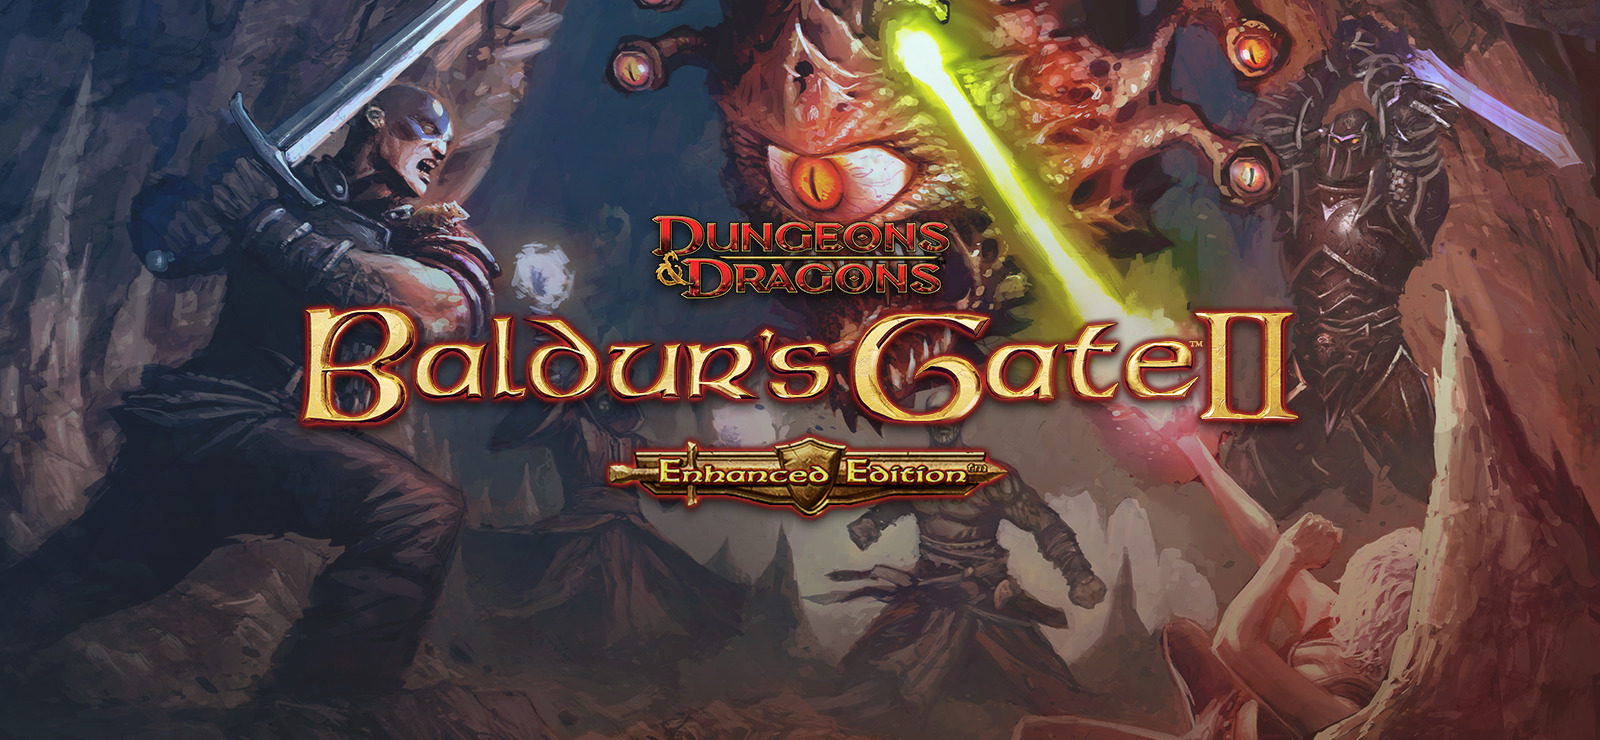 baldurs gate compared to newer bioware games